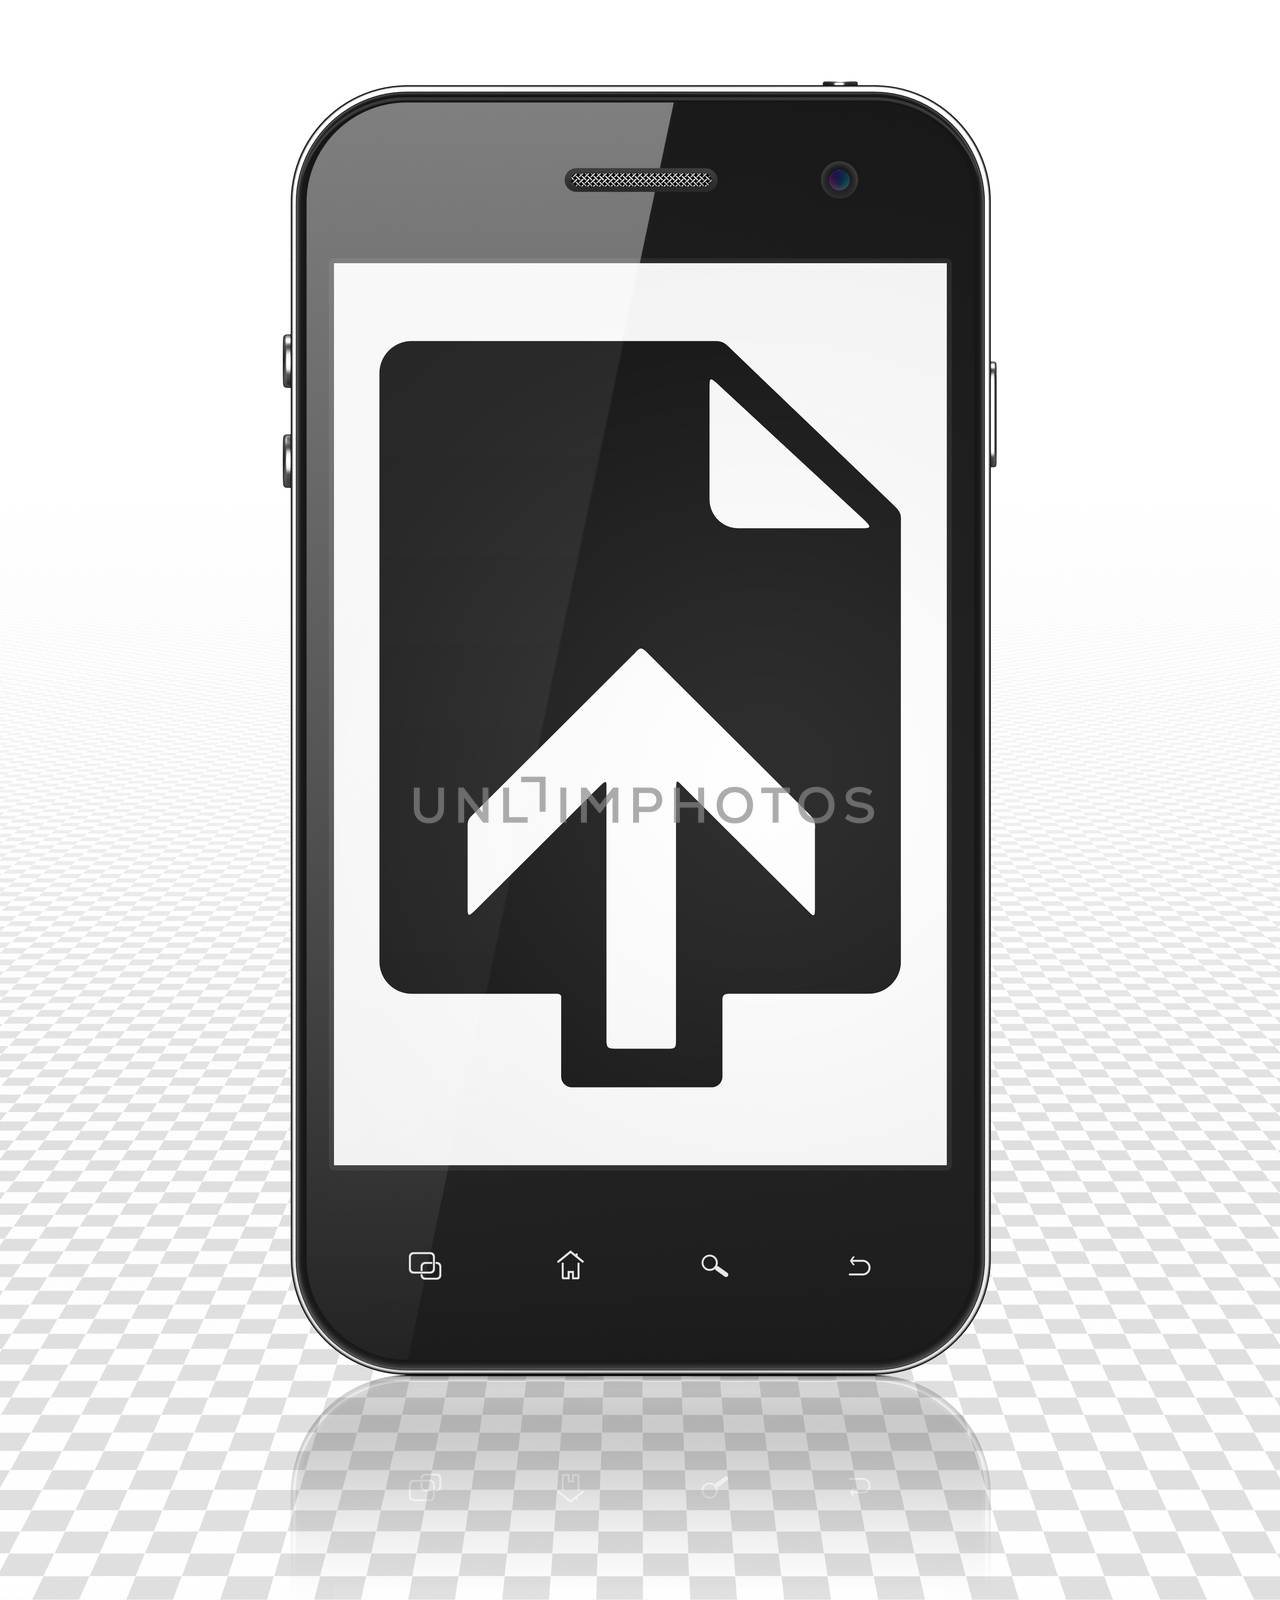 Web development concept: Smartphone with black Upload icon on display